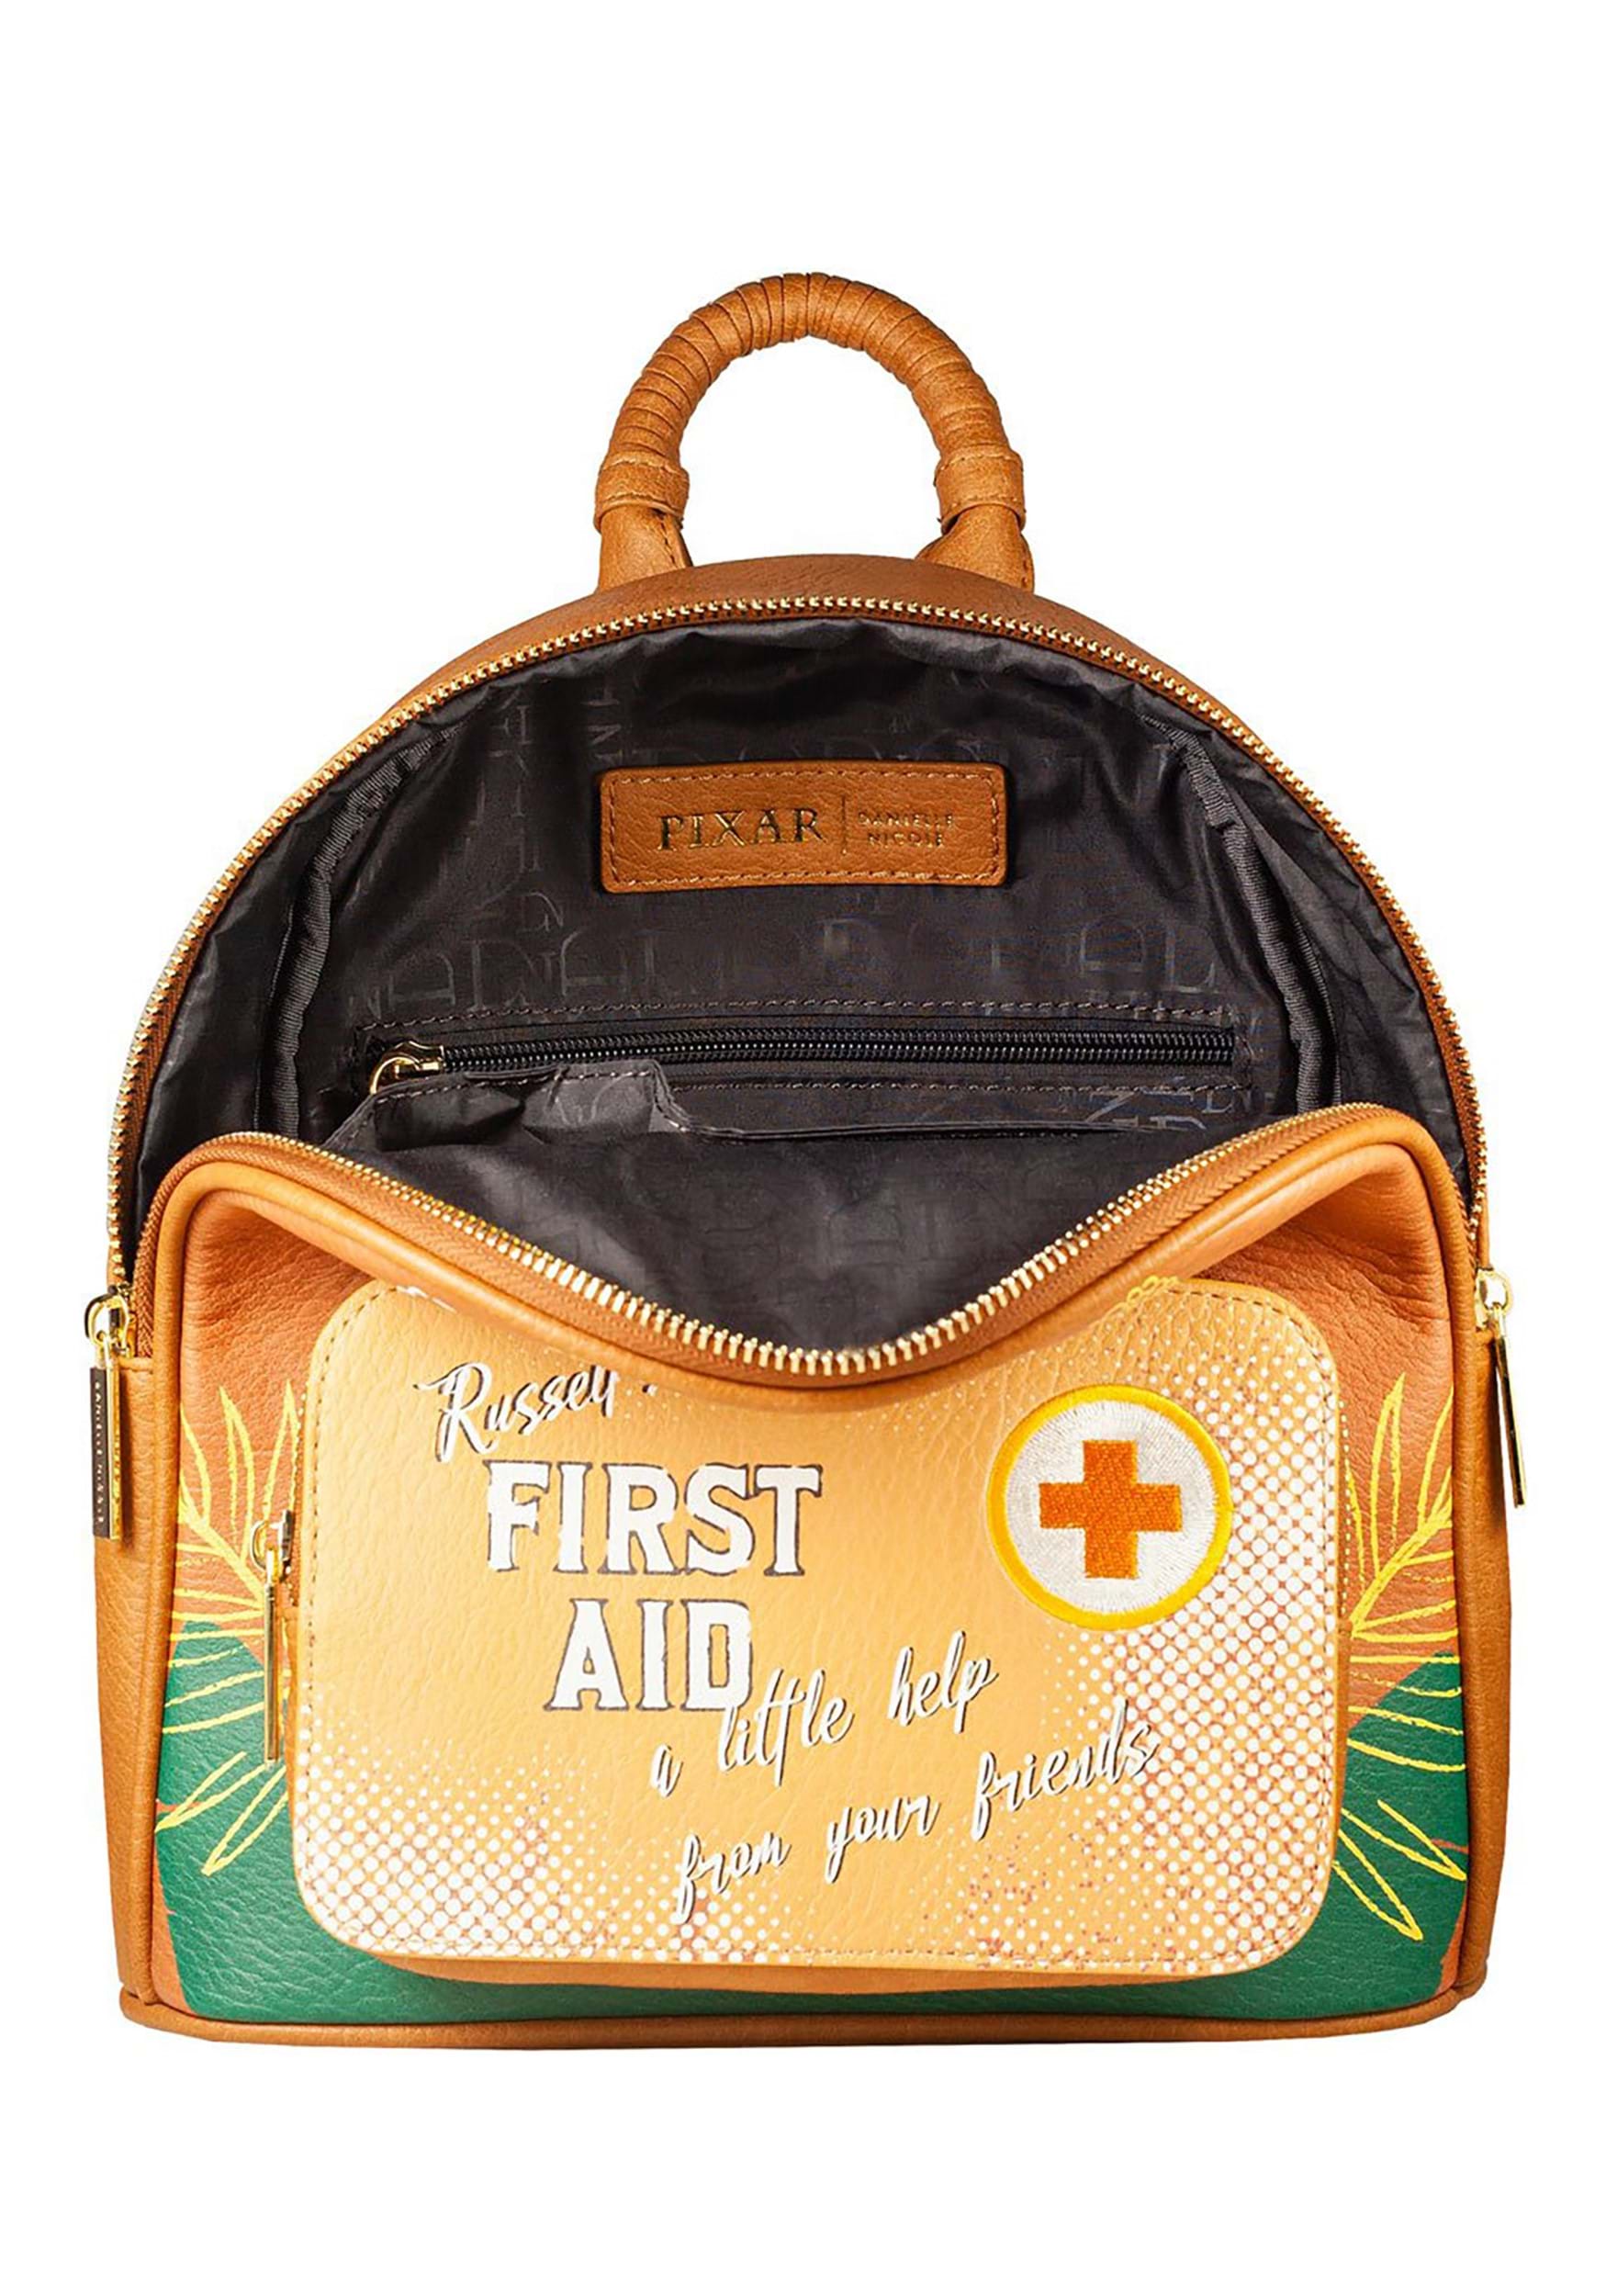 Danielle Nicole Pixar Up First Aid Kit Mini Backpack